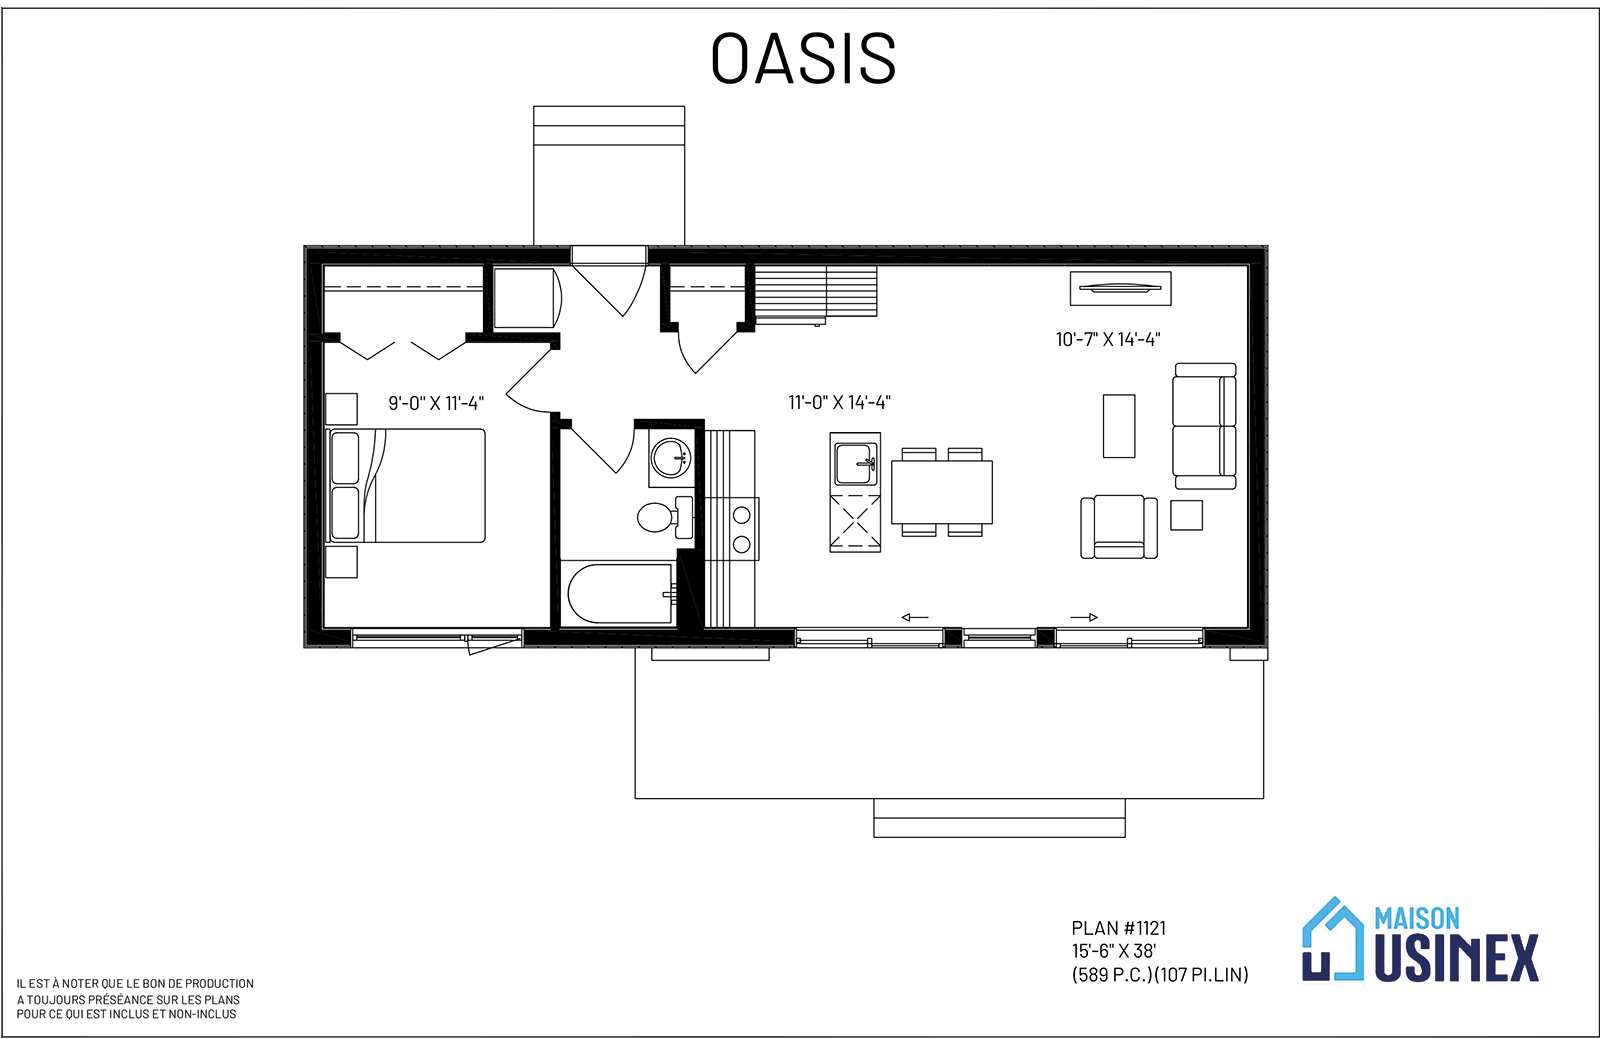 Oasis, Mini-house model